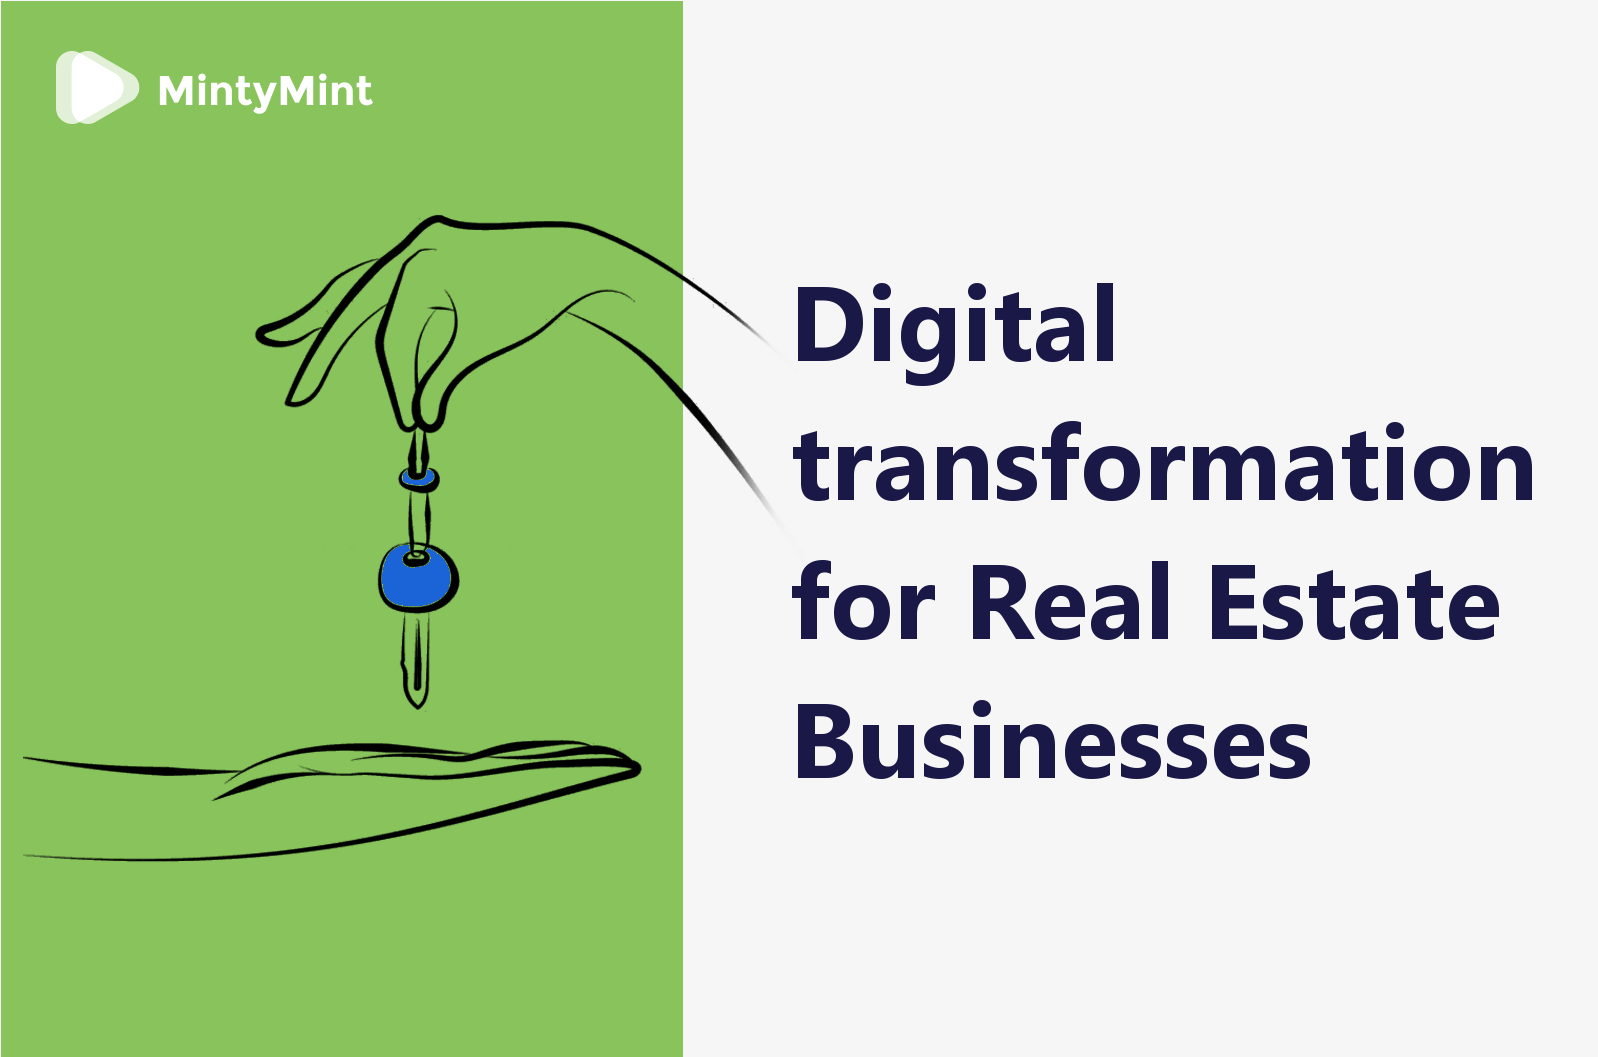 digital transformation in real estate